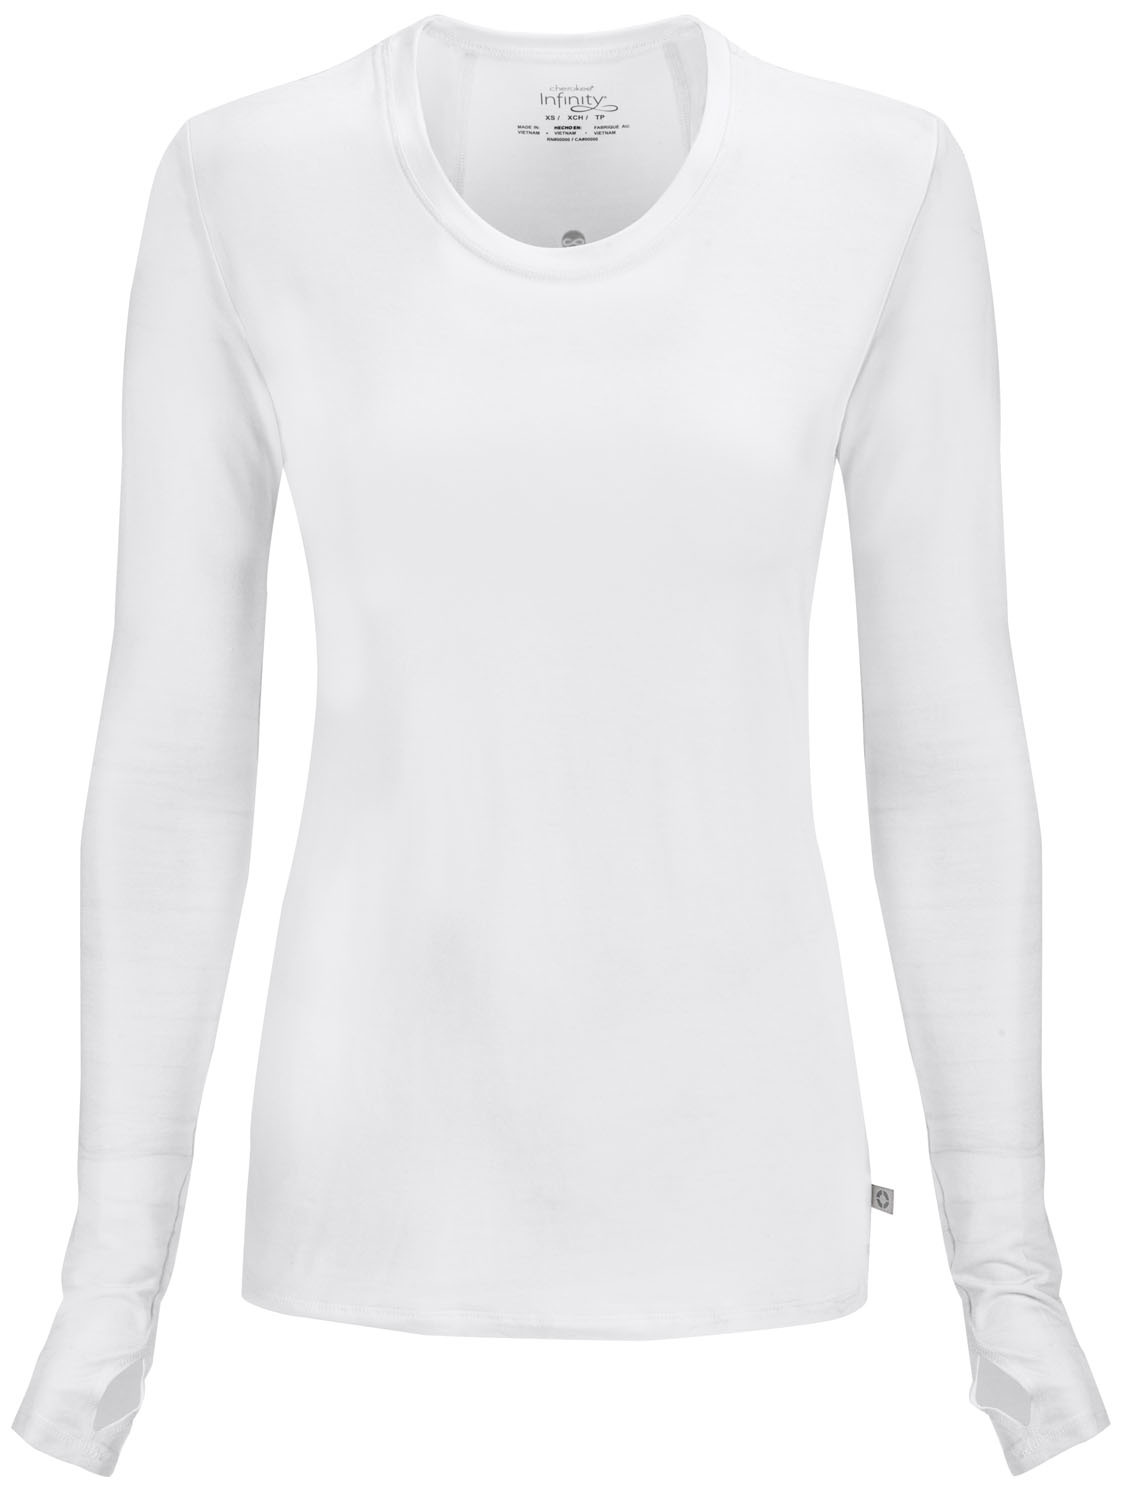 CHEROKEE White Long Sleeve Women's Underscrub Shirts 2626A